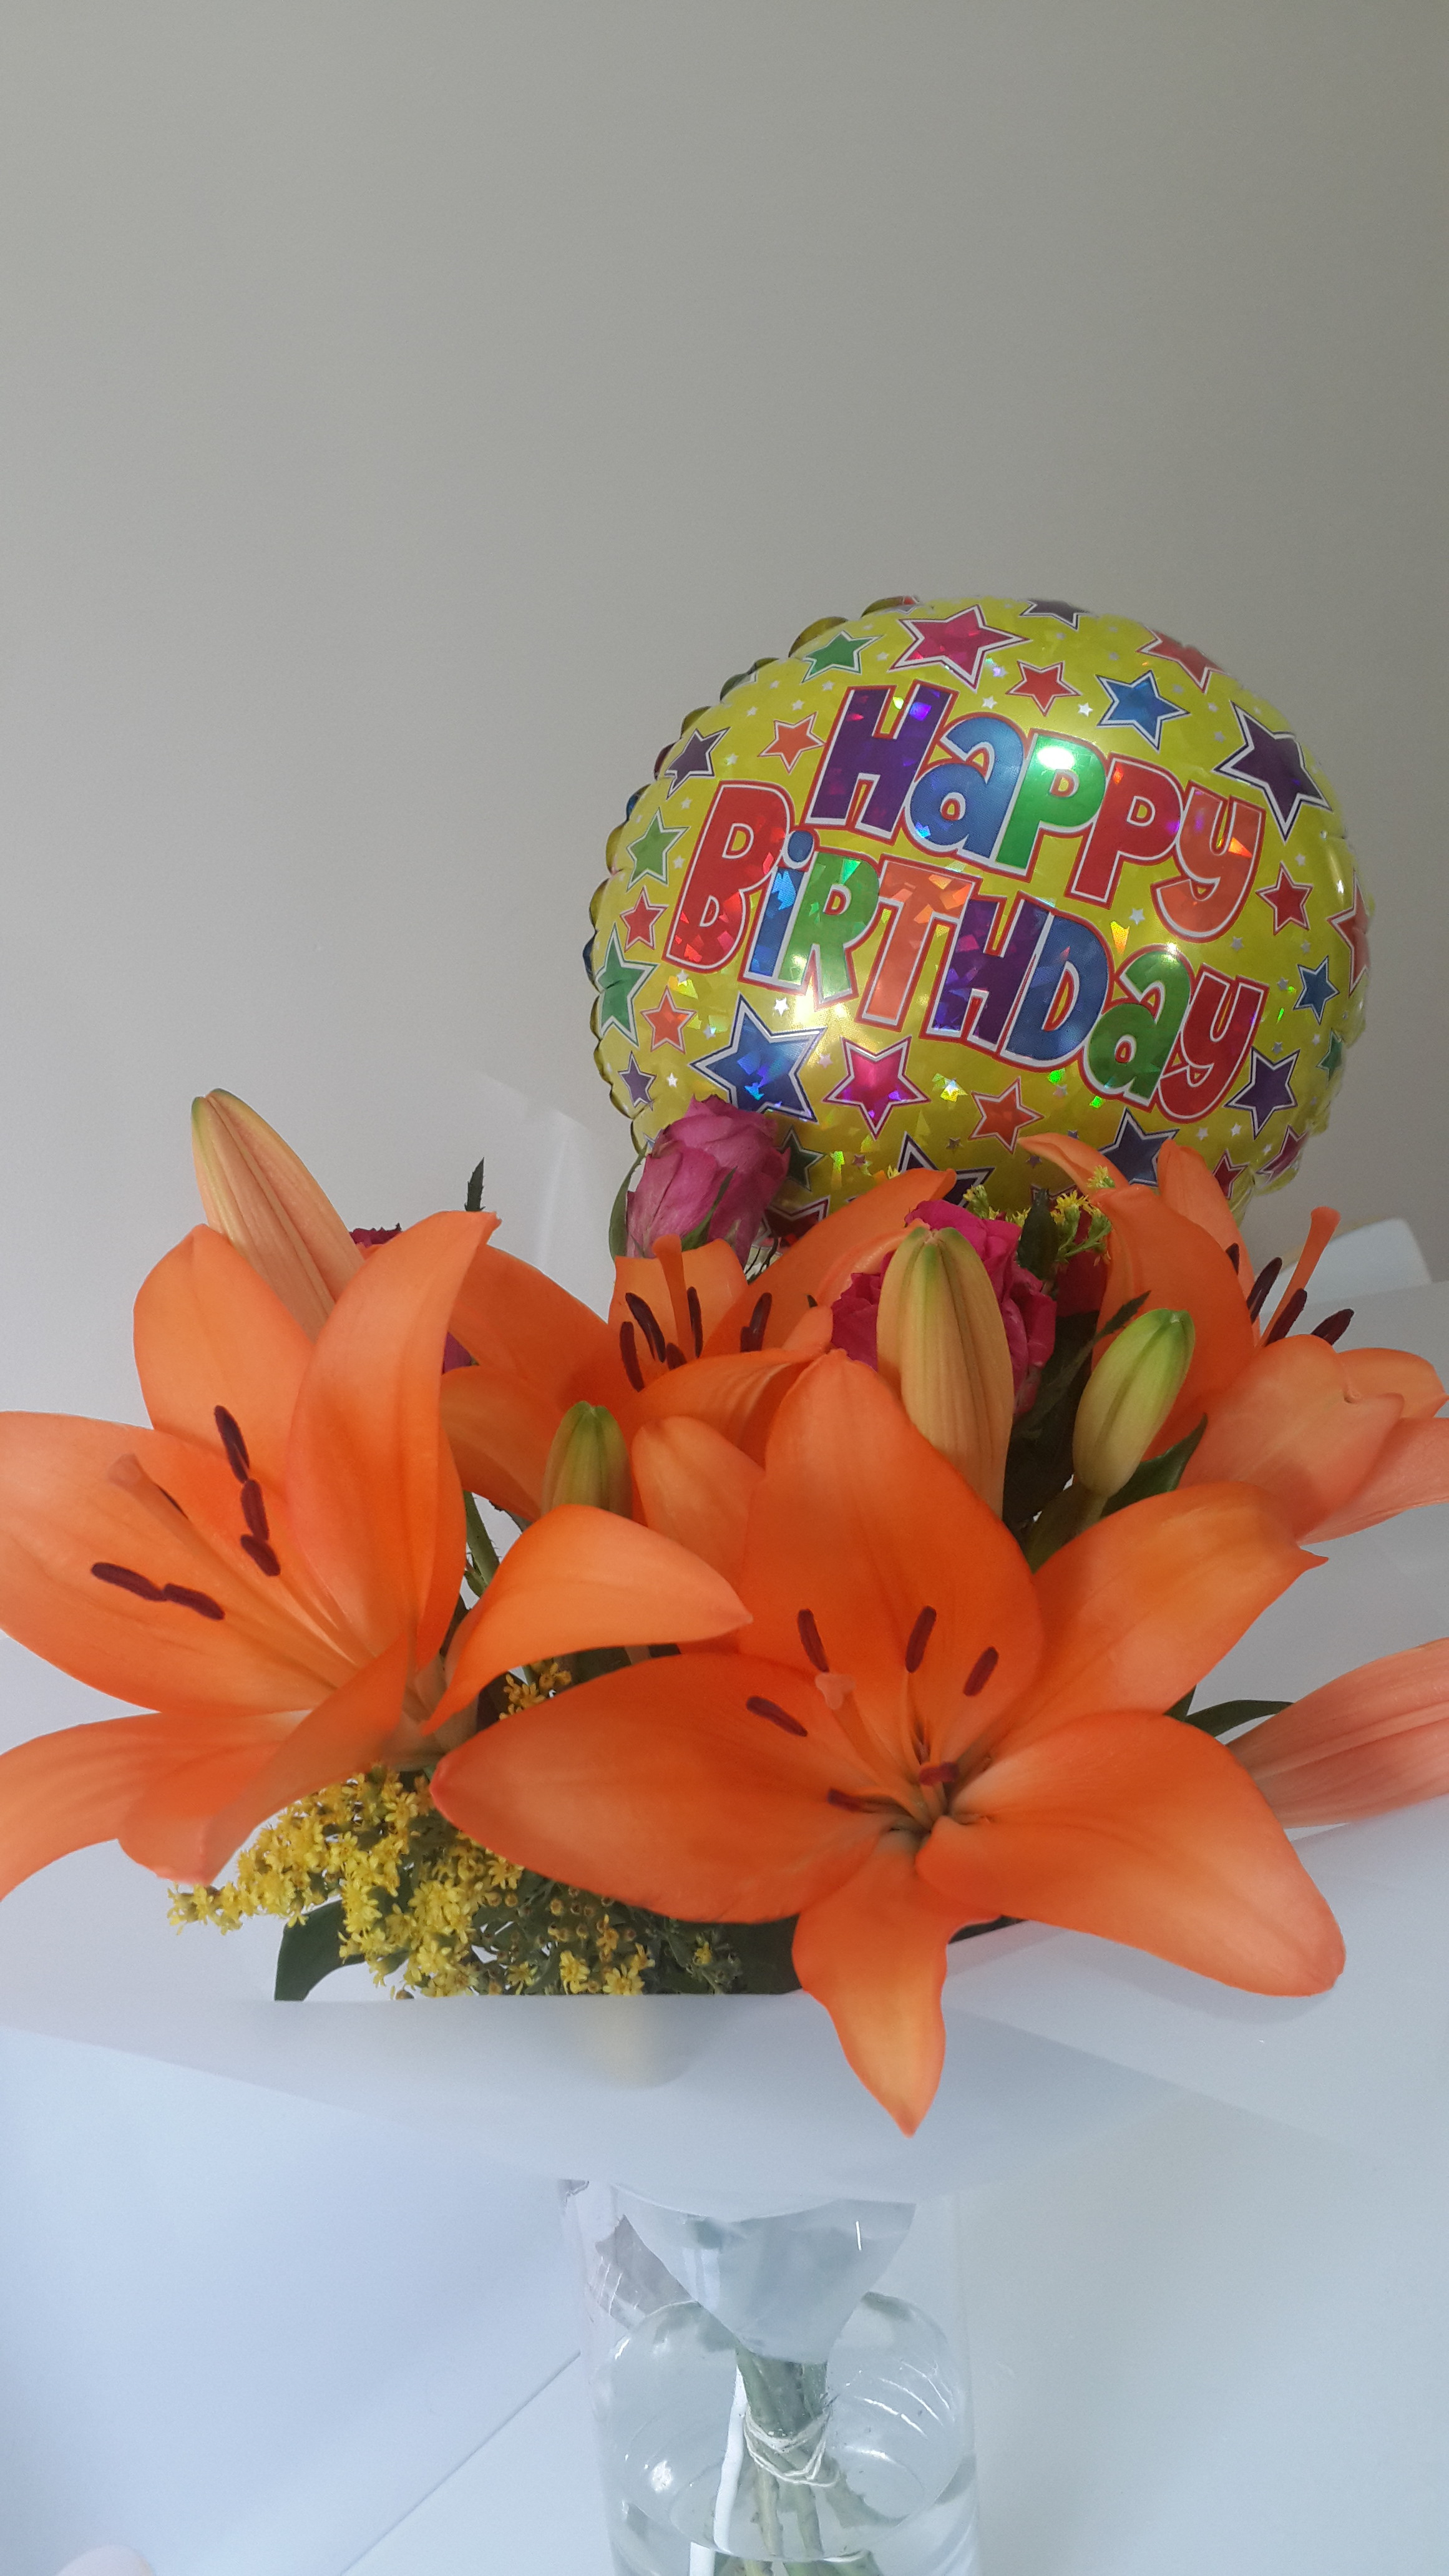 Orange Lilies In vase with Happy Birthday Balloon